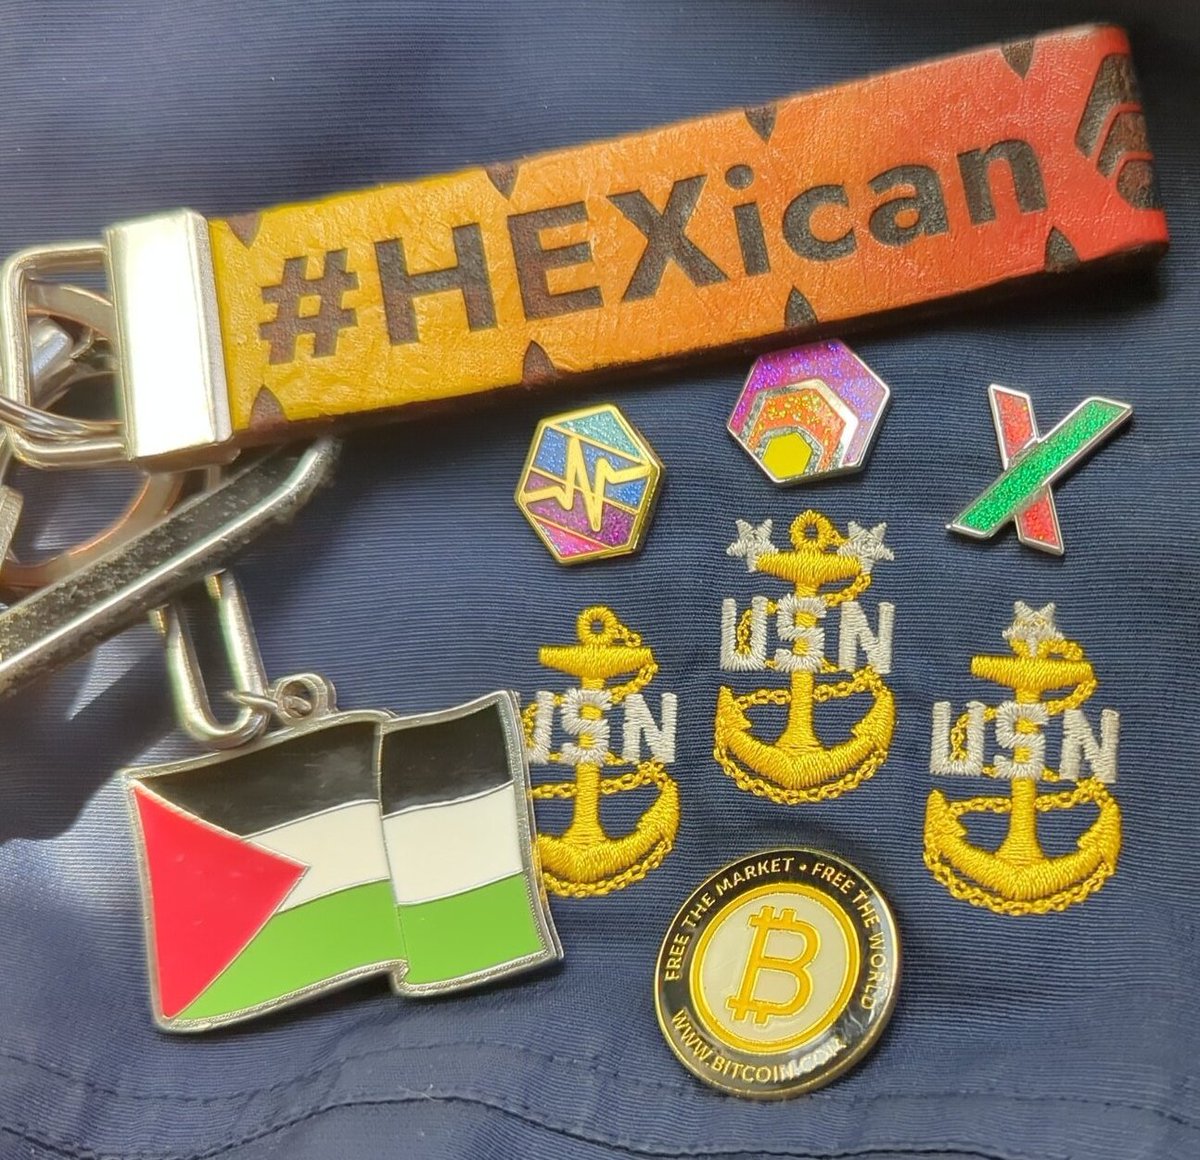 #Hexicans4Shiva BOOM 💥👑💥👑💥 #Hexicans #HEX #PULSECHAIN
#FreePalestine
#EndGenocide